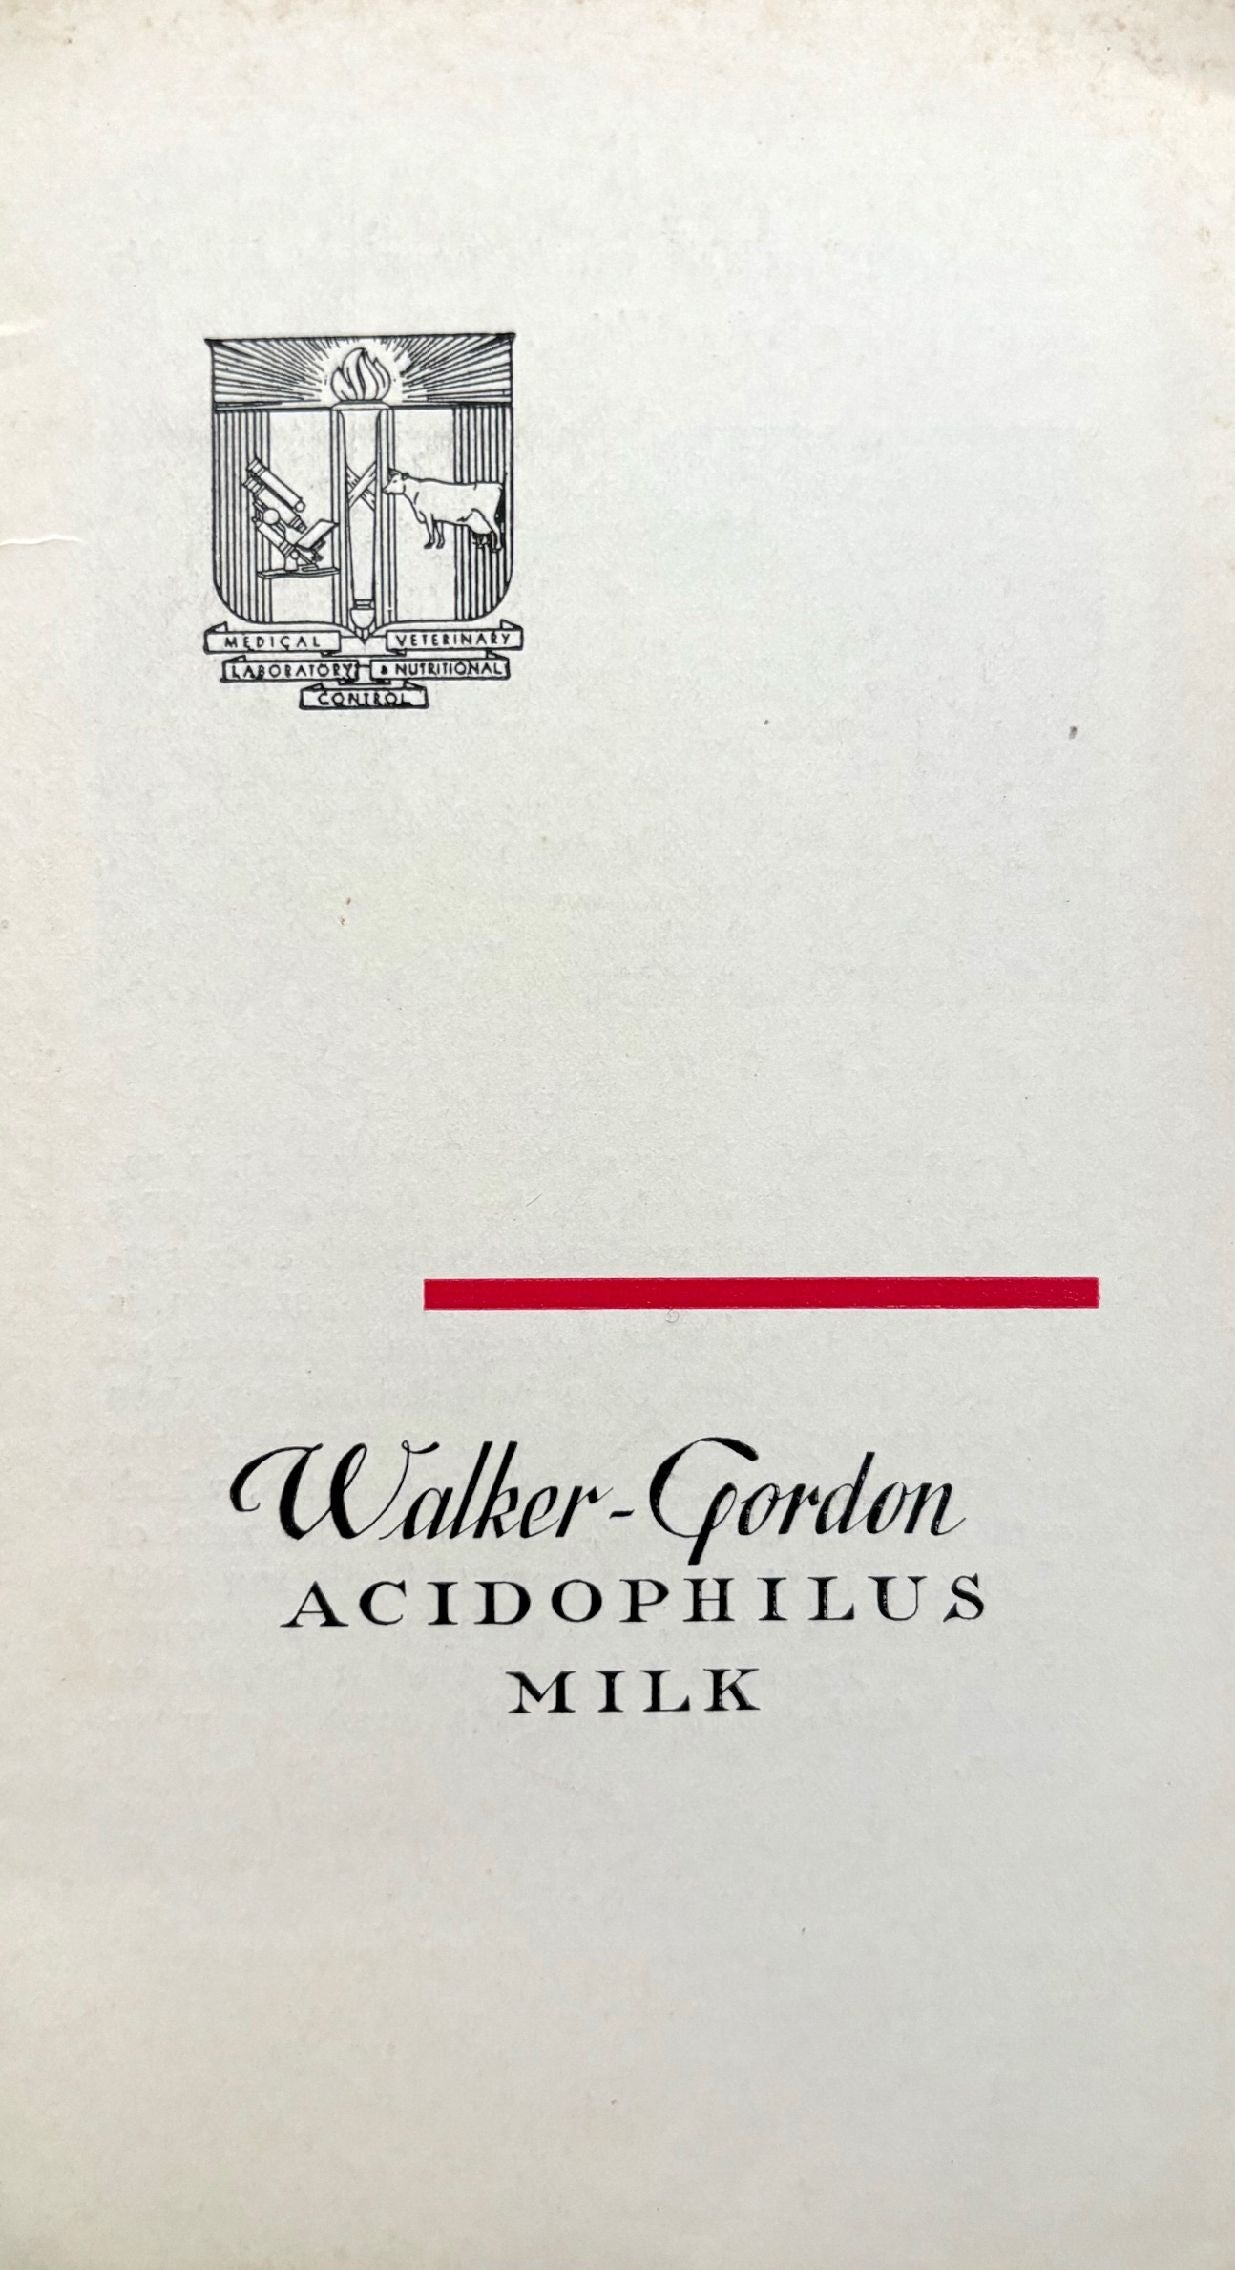 (*NEW ARRIVAL*) (Booklet - Health) Walker-Gordon Acidophilus Milk